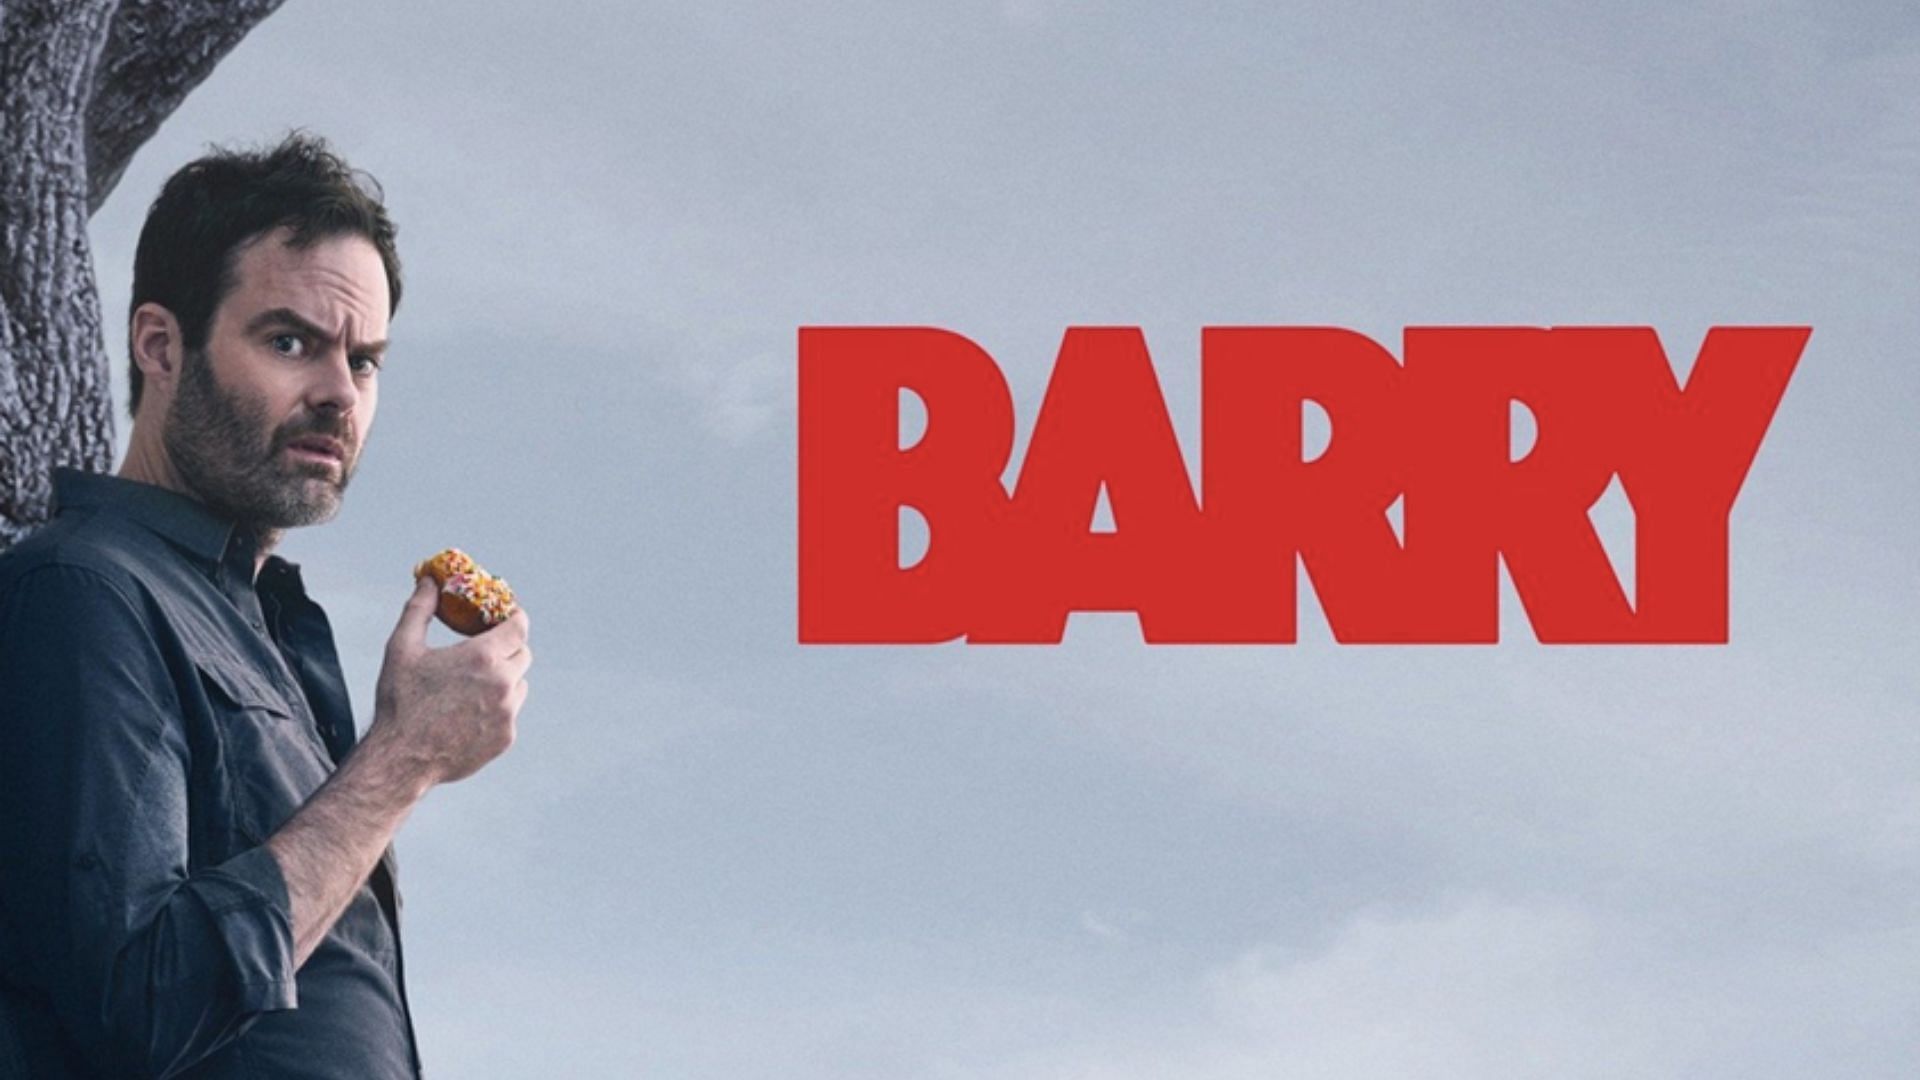 Barry season 3 poster (Image via Rotten Tomatoes)